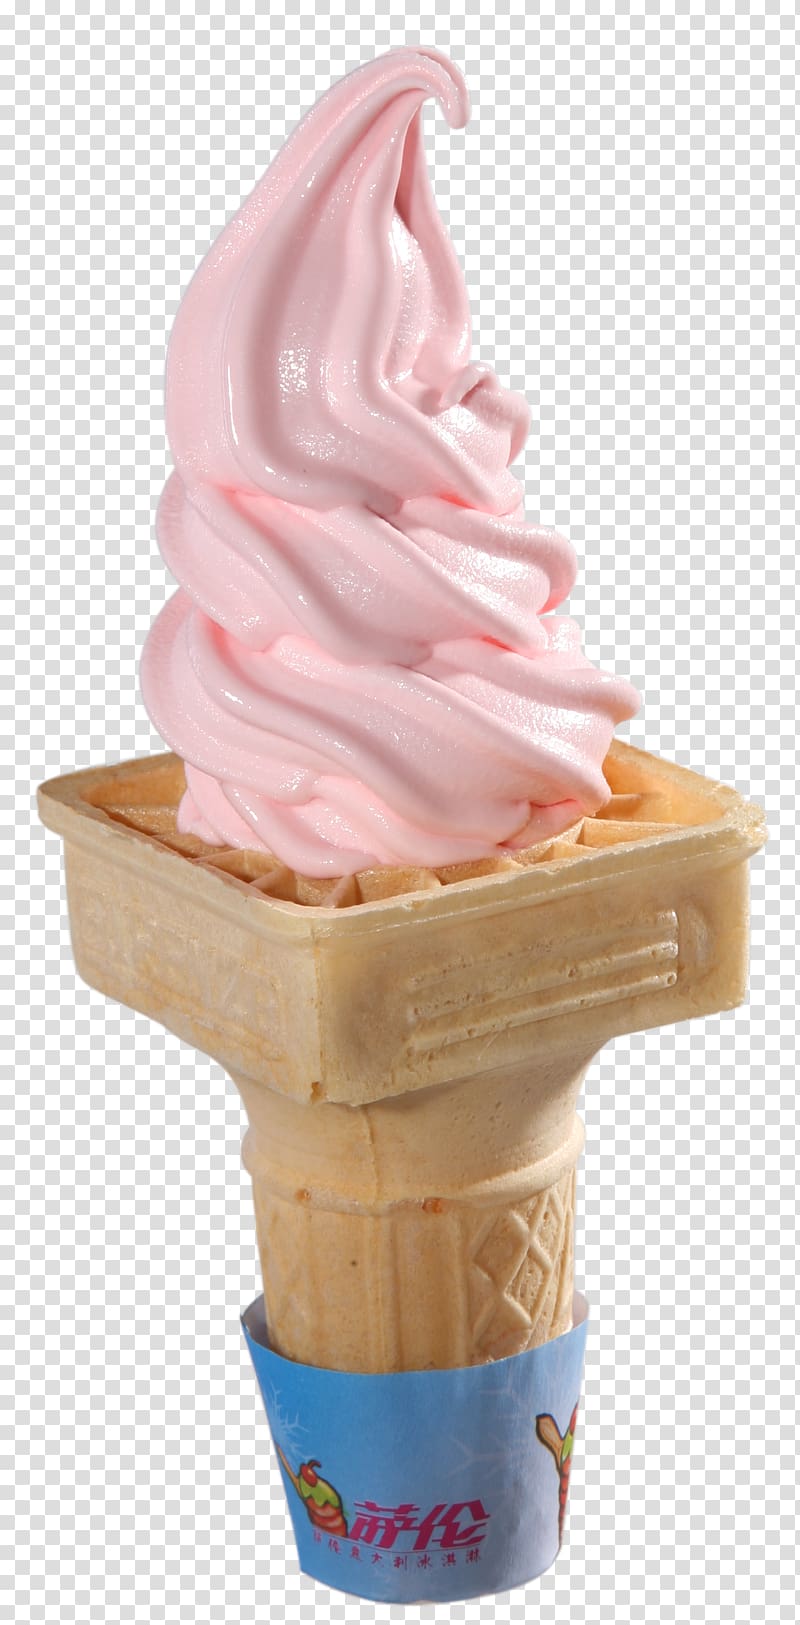 Ice Cream Cones Sundae Milkshake Frozen yogurt, Cartoon ice cream beverage icon transparent background PNG clipart